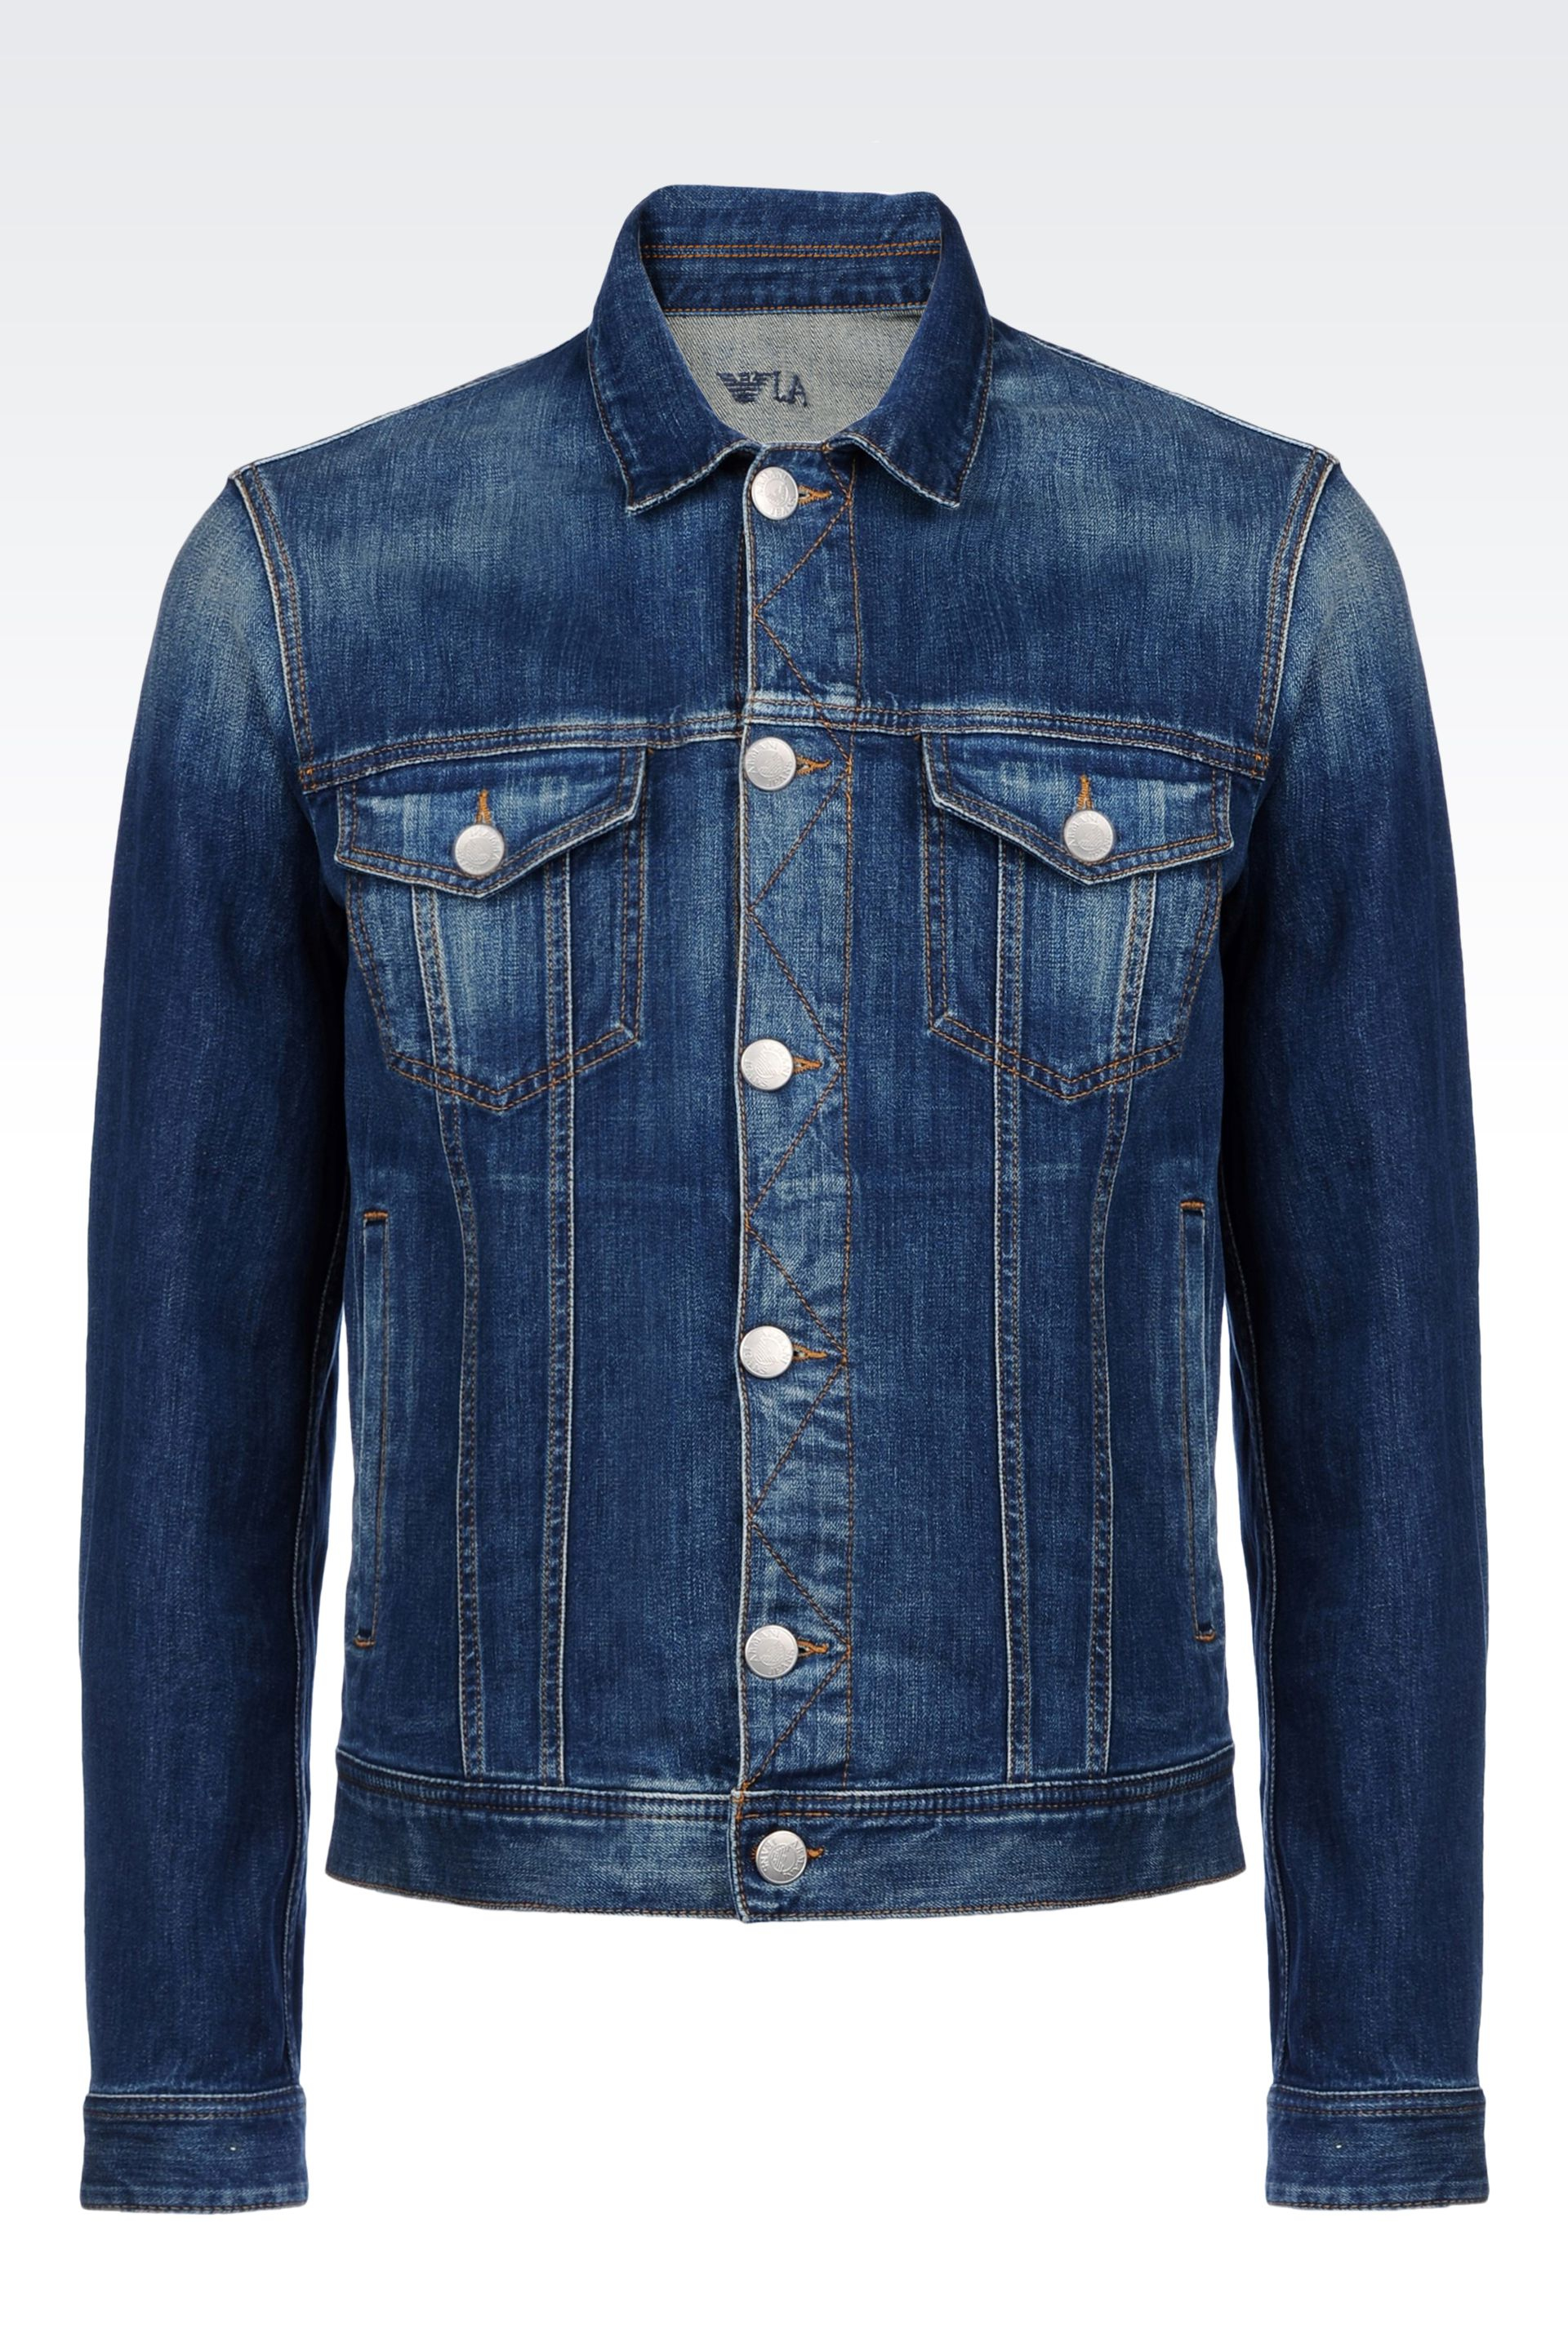 Armani Jeans Denim Jacket in Blue for Men - Lyst